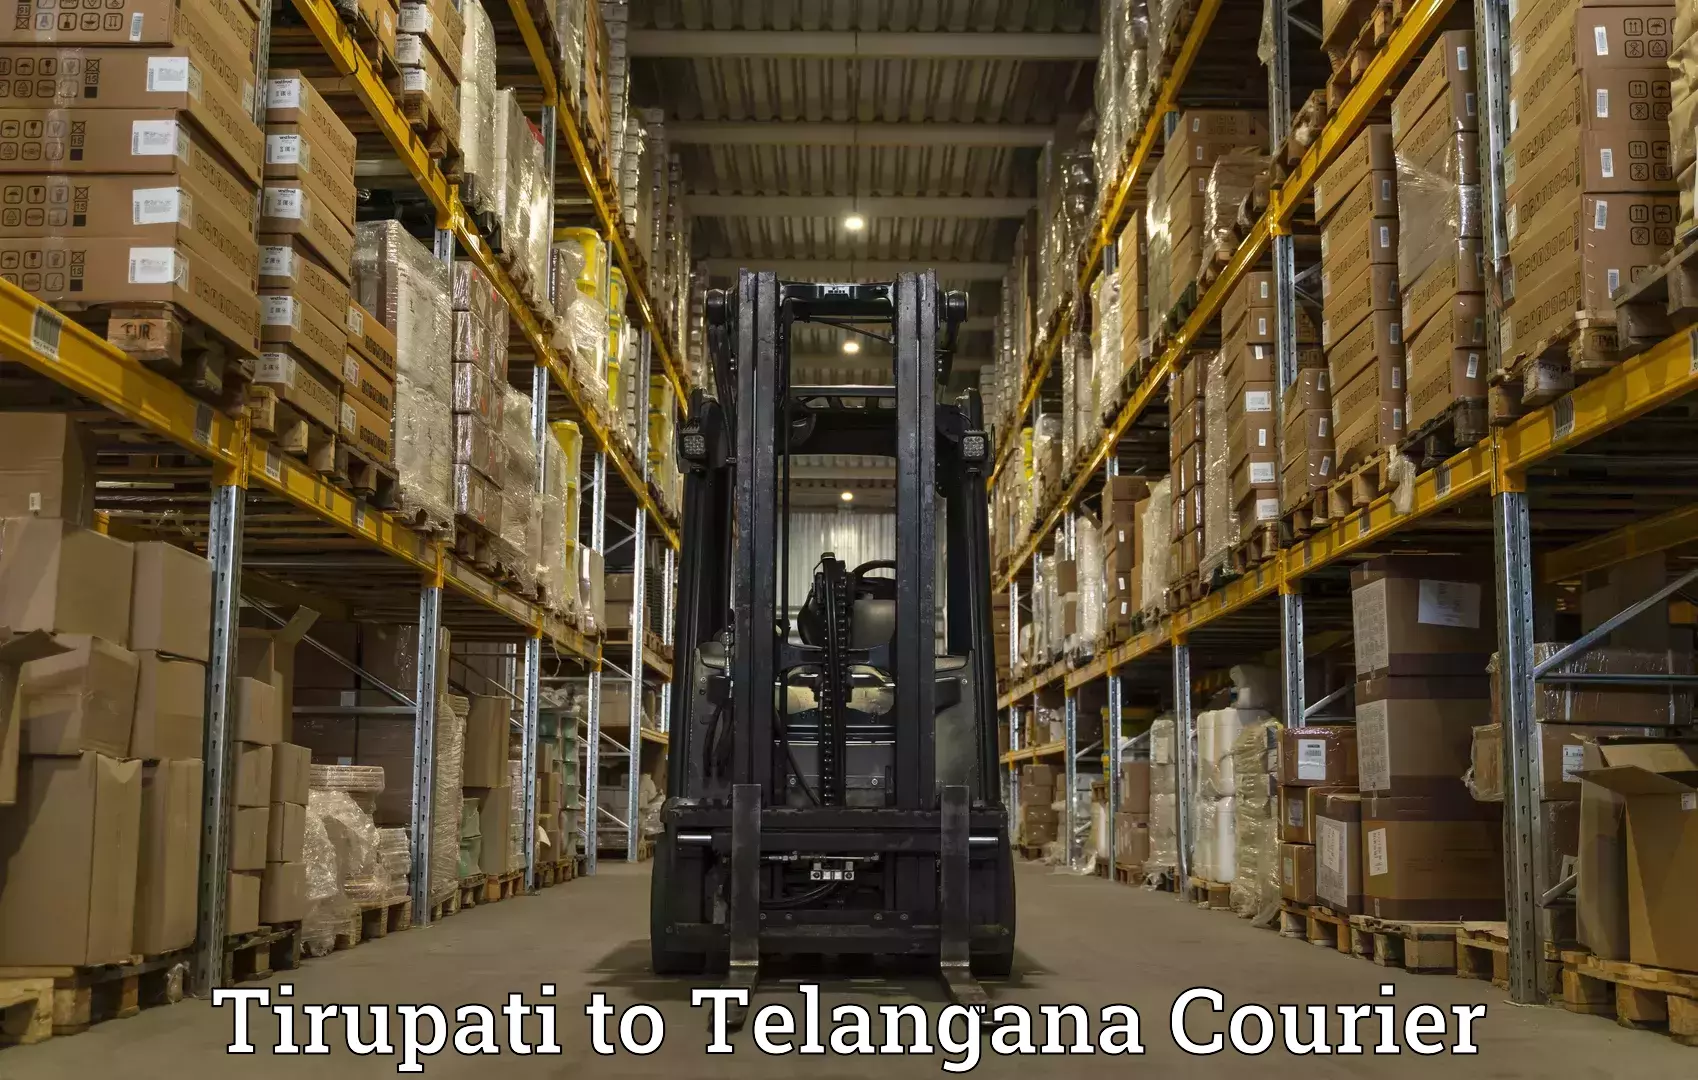 Modern courier technology Tirupati to Secunderabad